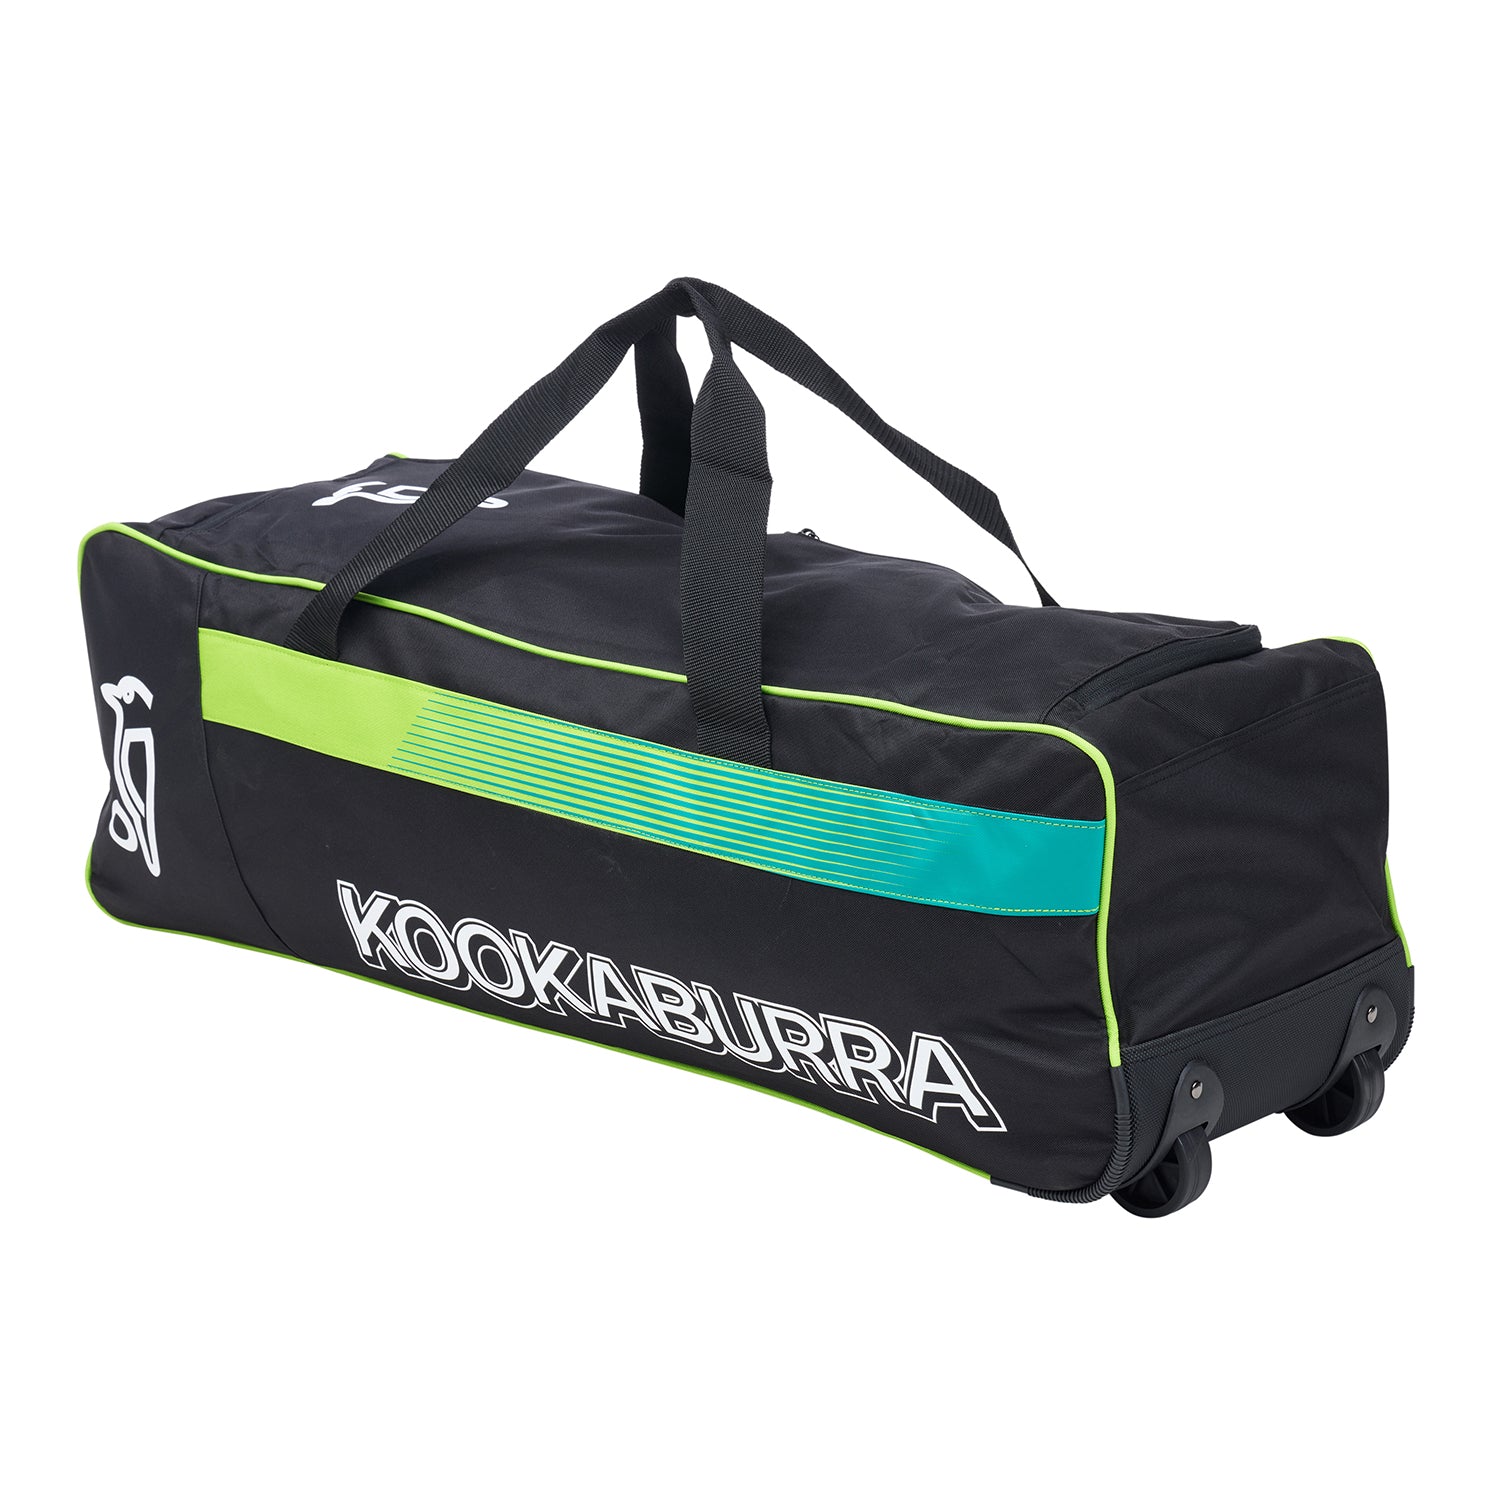 Kookaburra Pro 5.0 Cricket Wheelie Bag